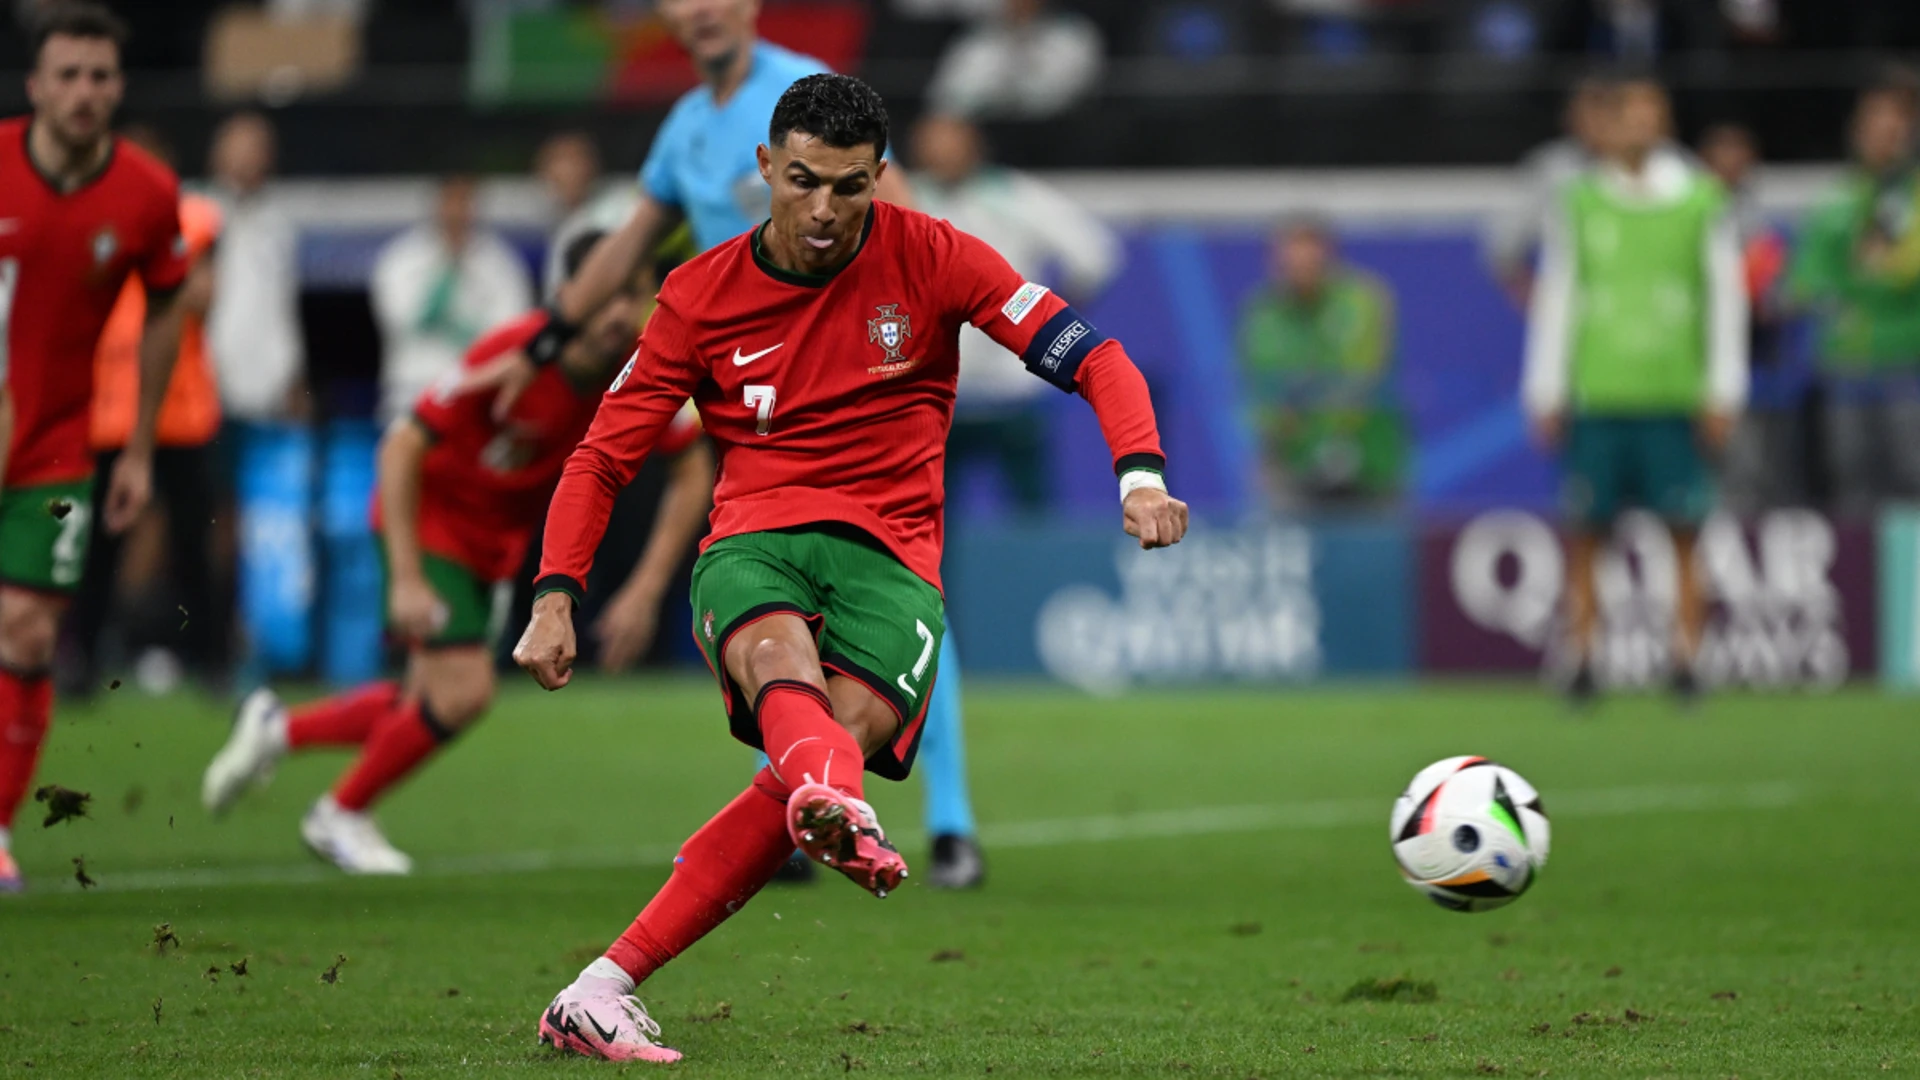 Ronaldo's Portugal struggles continue ahead of Euros showdown with France